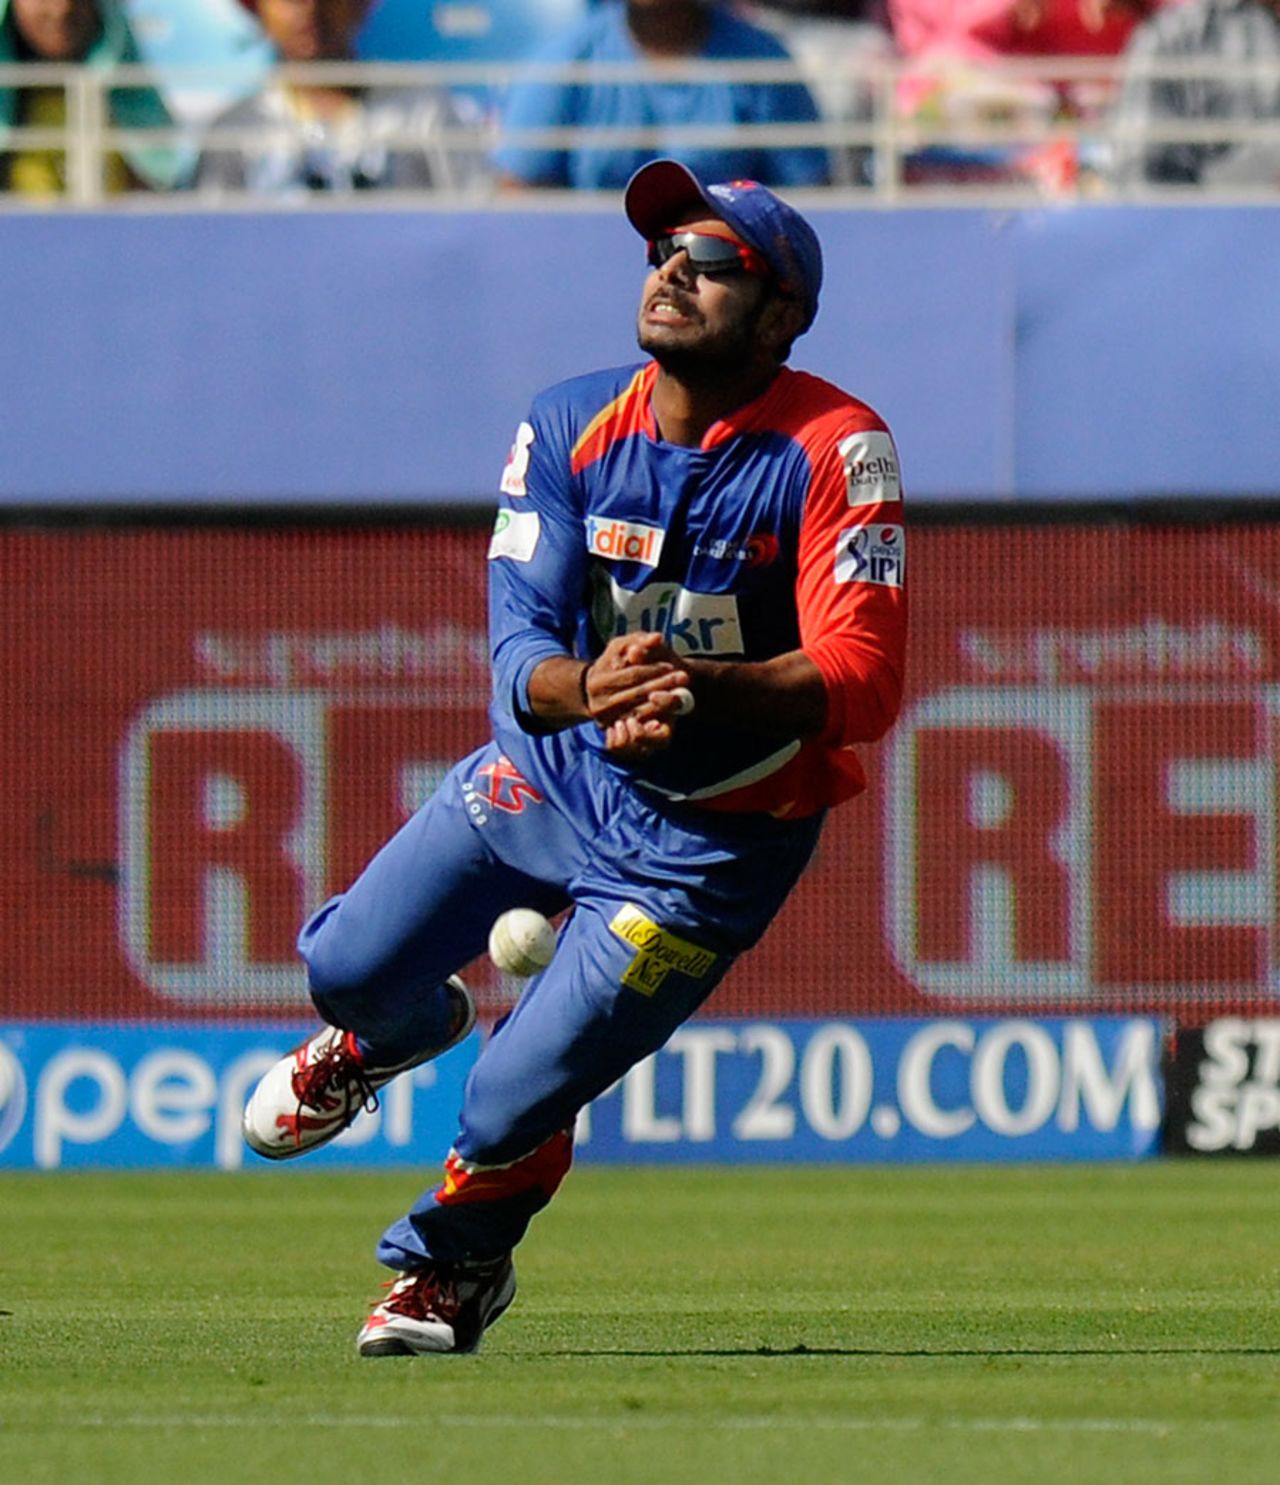 Manoj Tiwary had a poor outing in the field, Sunrisers Hyderabad v Delhi Daredevils, IPL 2014, Dubai, April 25, 2014